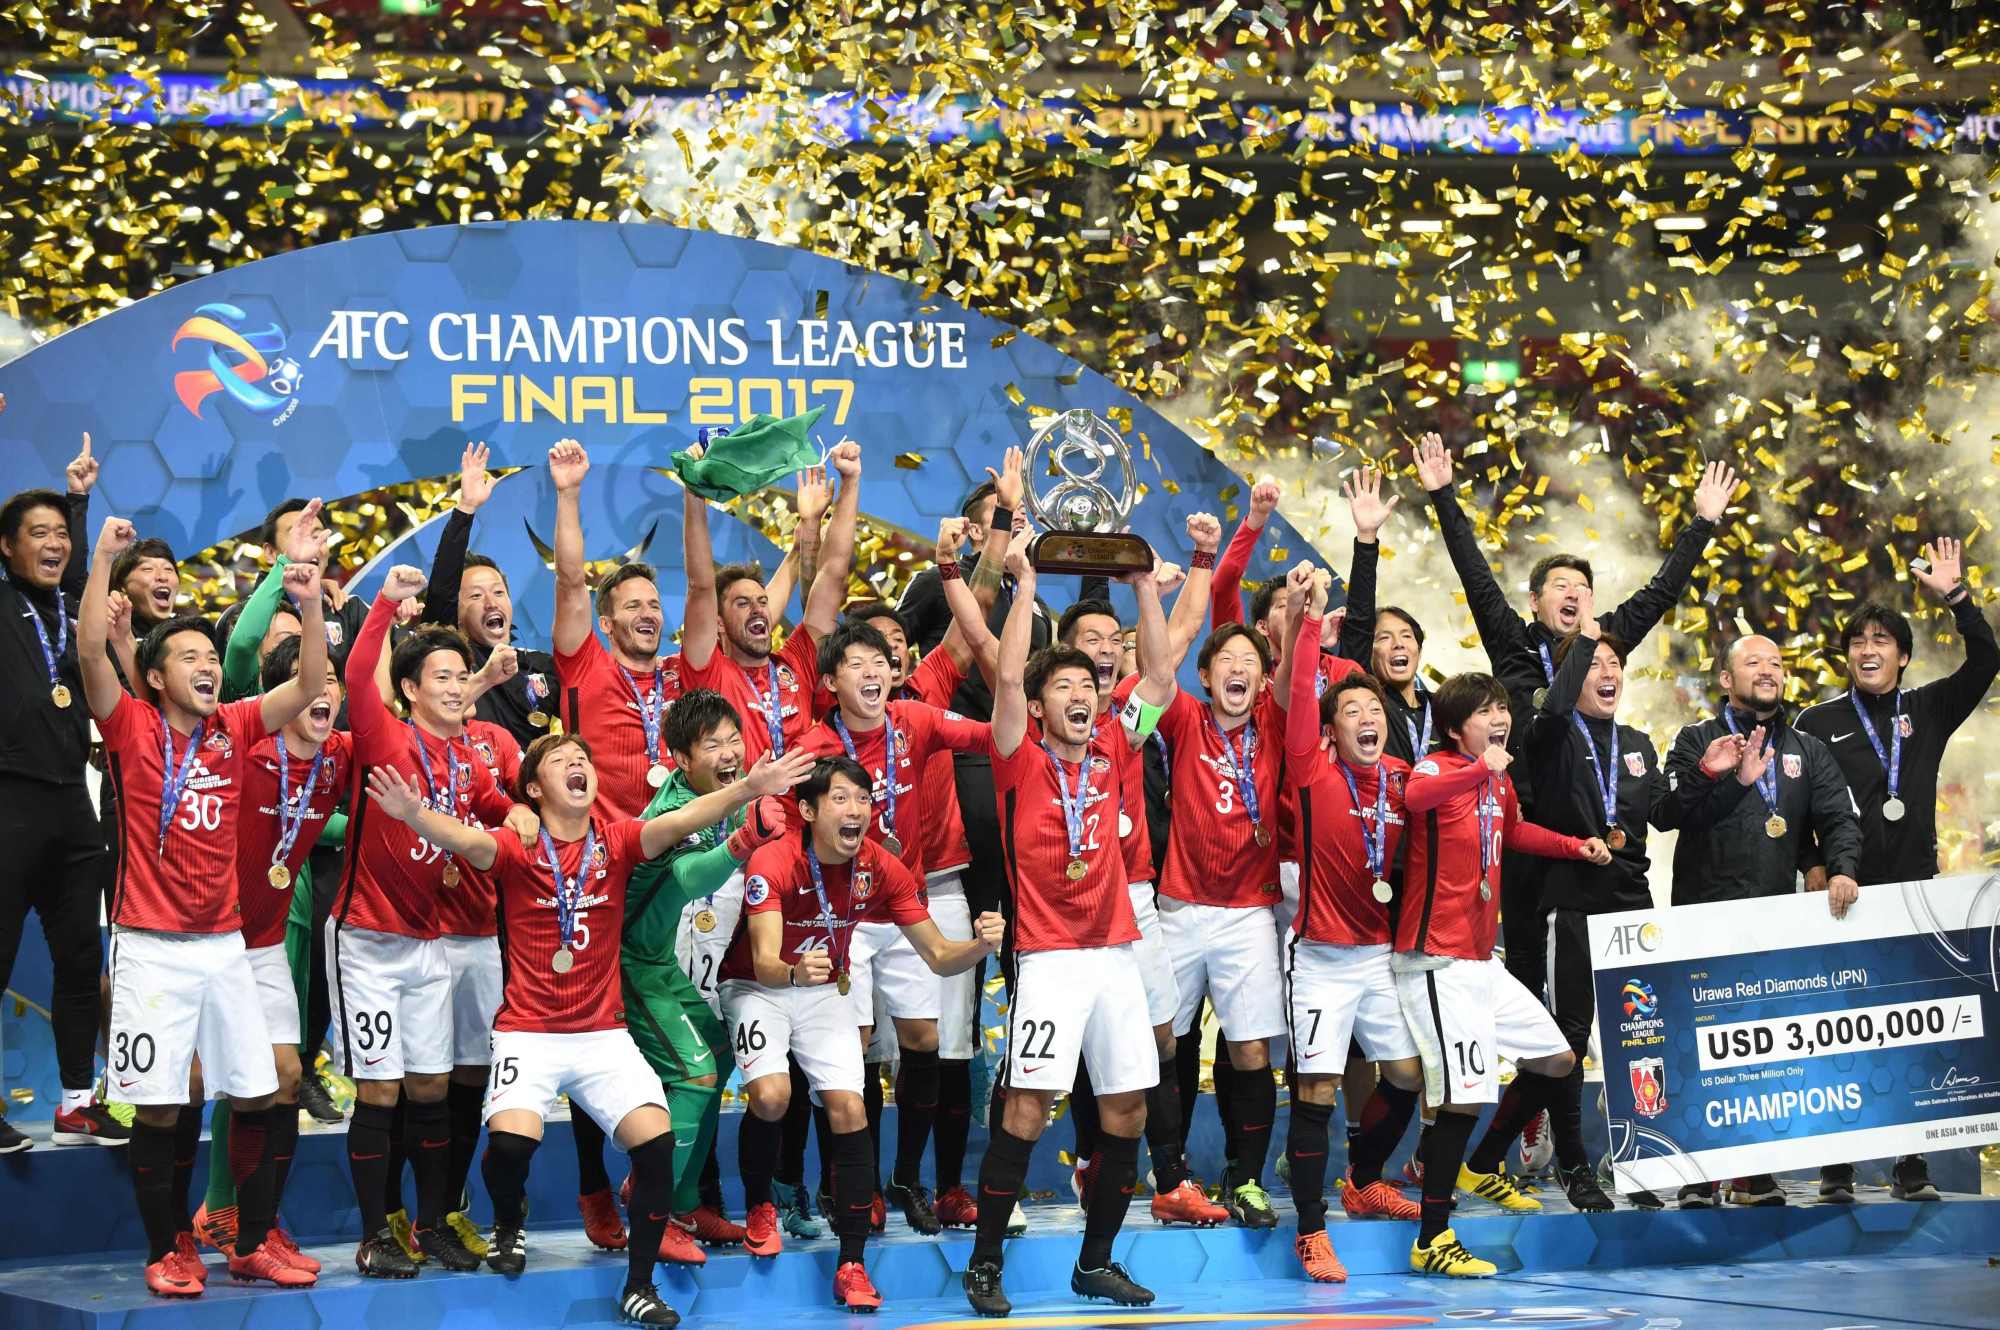 Urawa beat Al Hilal to win third Asian Champions League, Football News